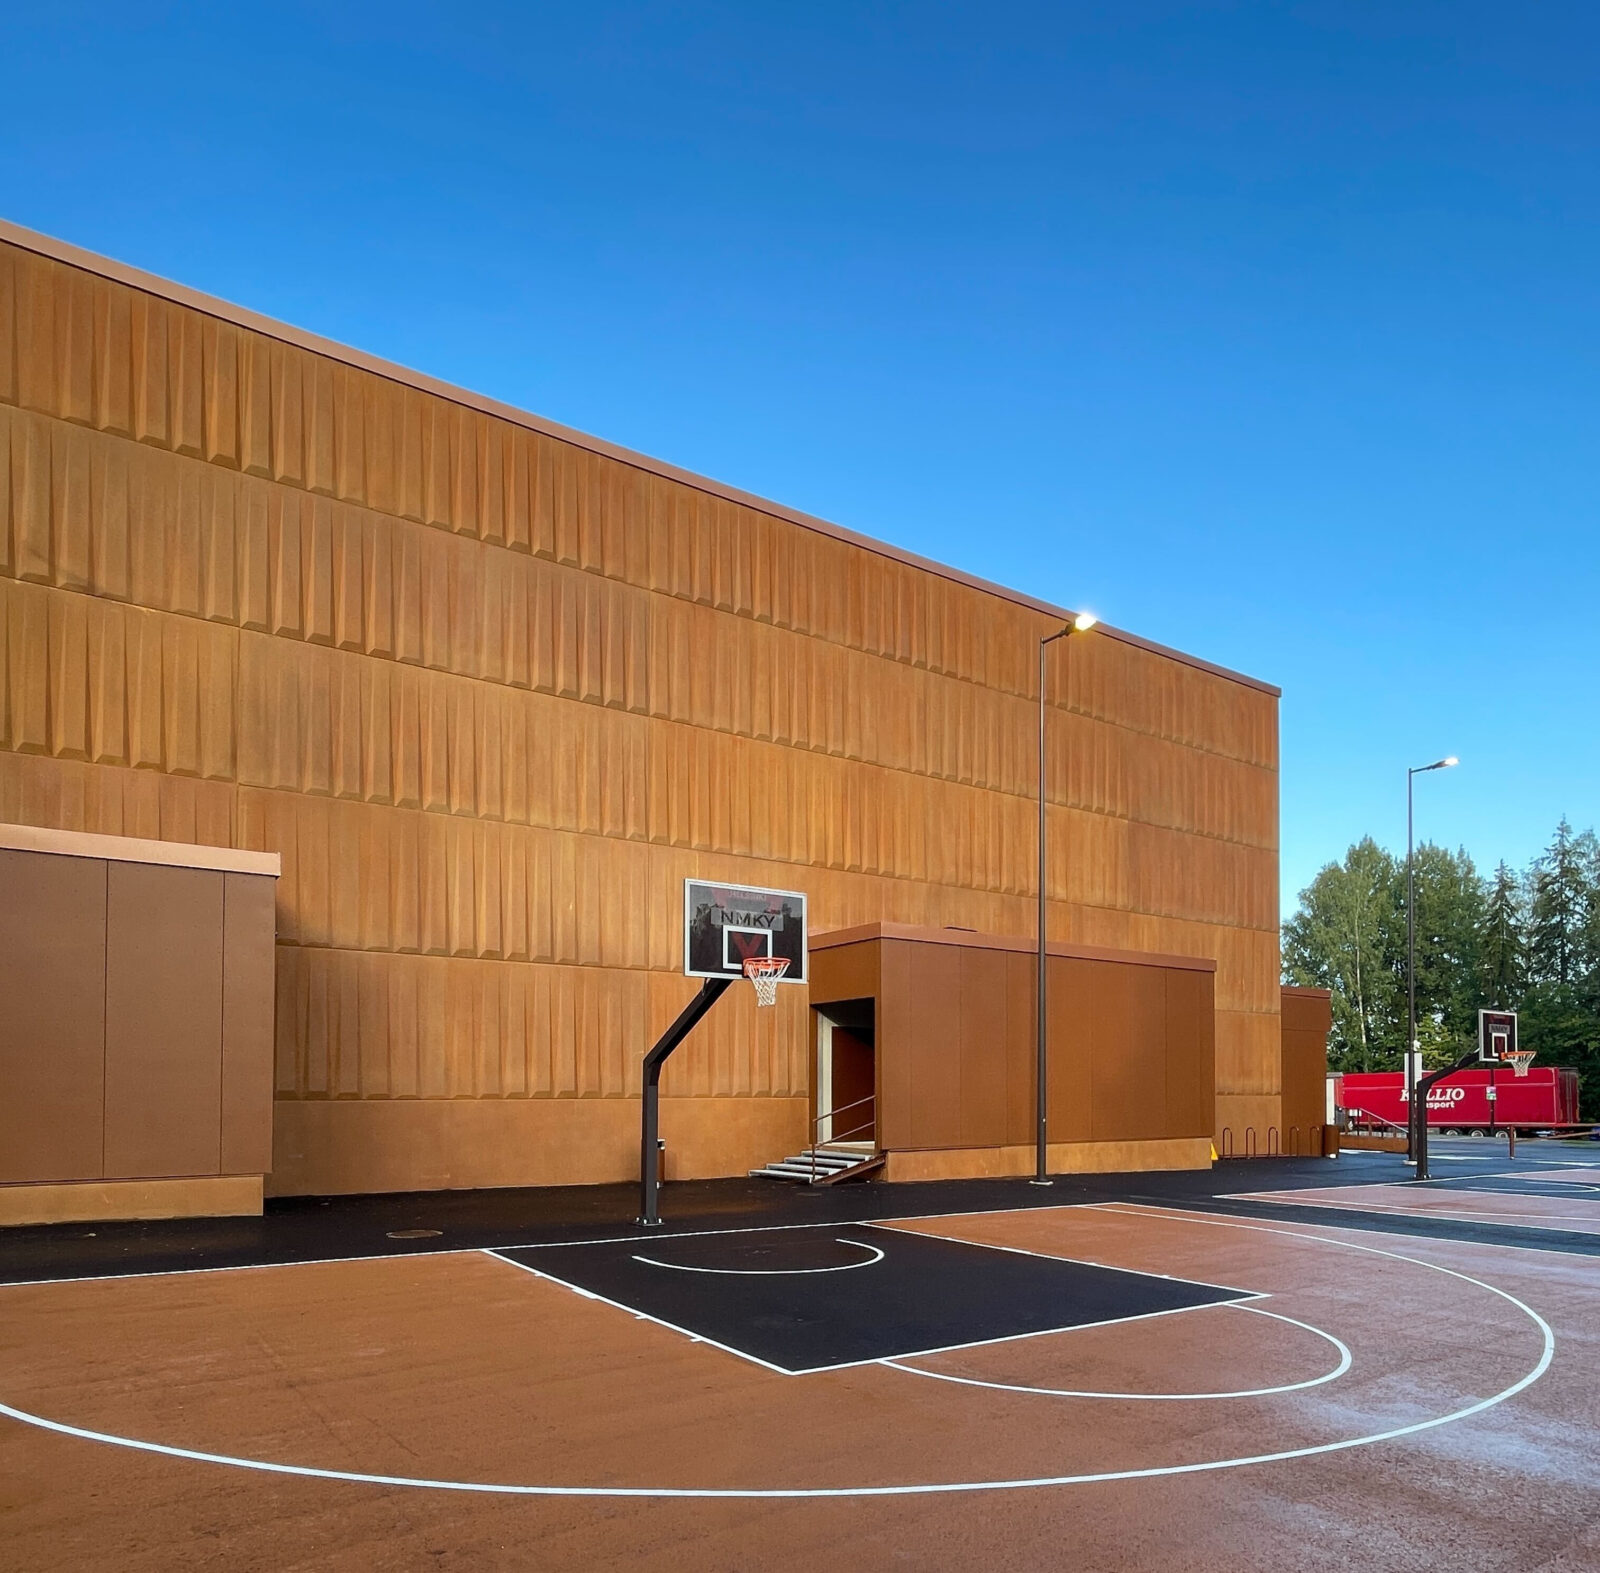 Namika Basketball Arena